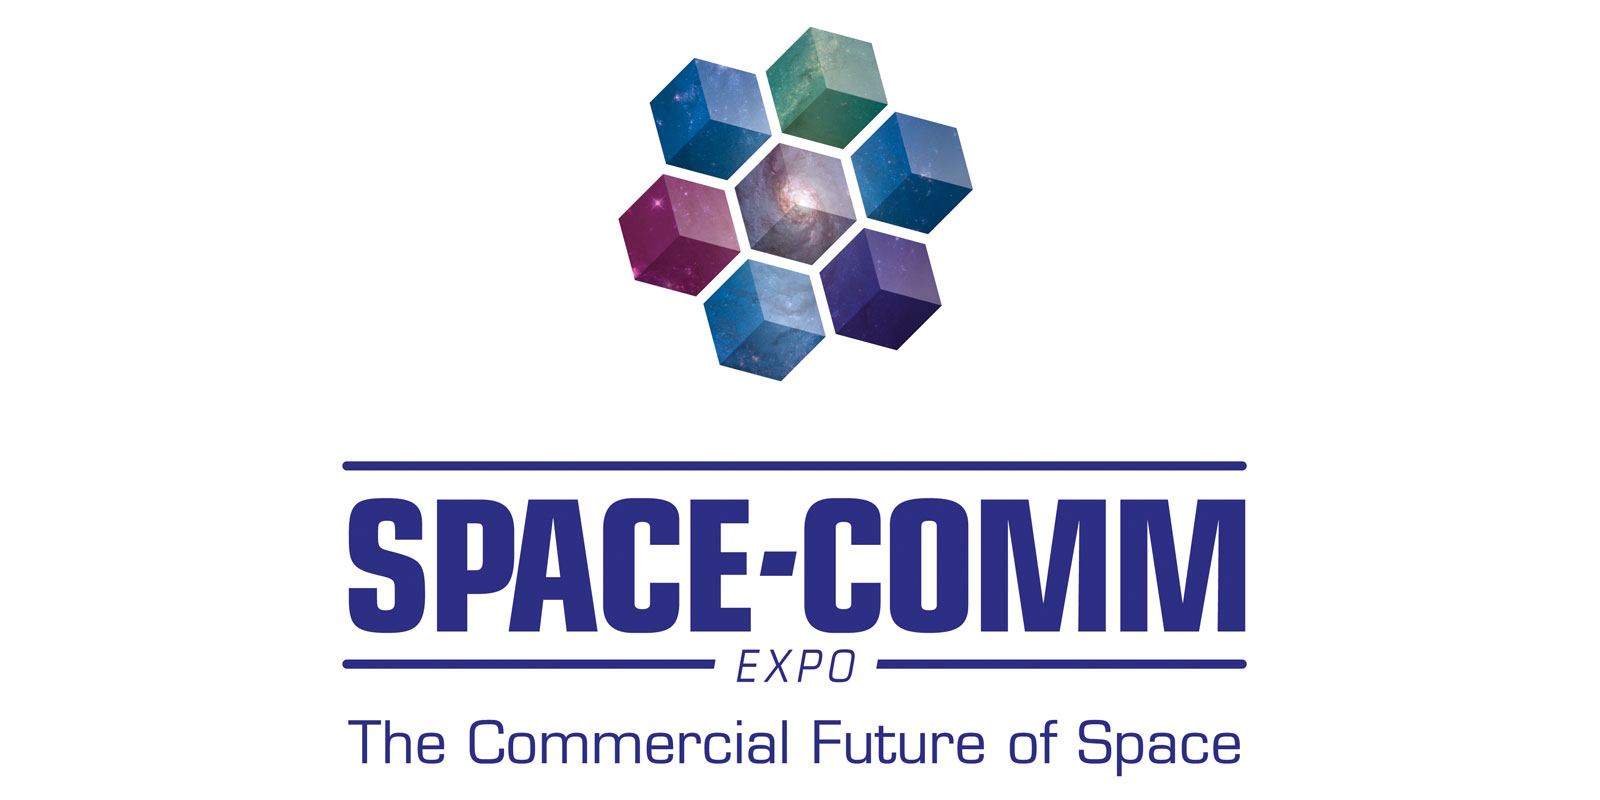 Space-comm expo 2022 logo